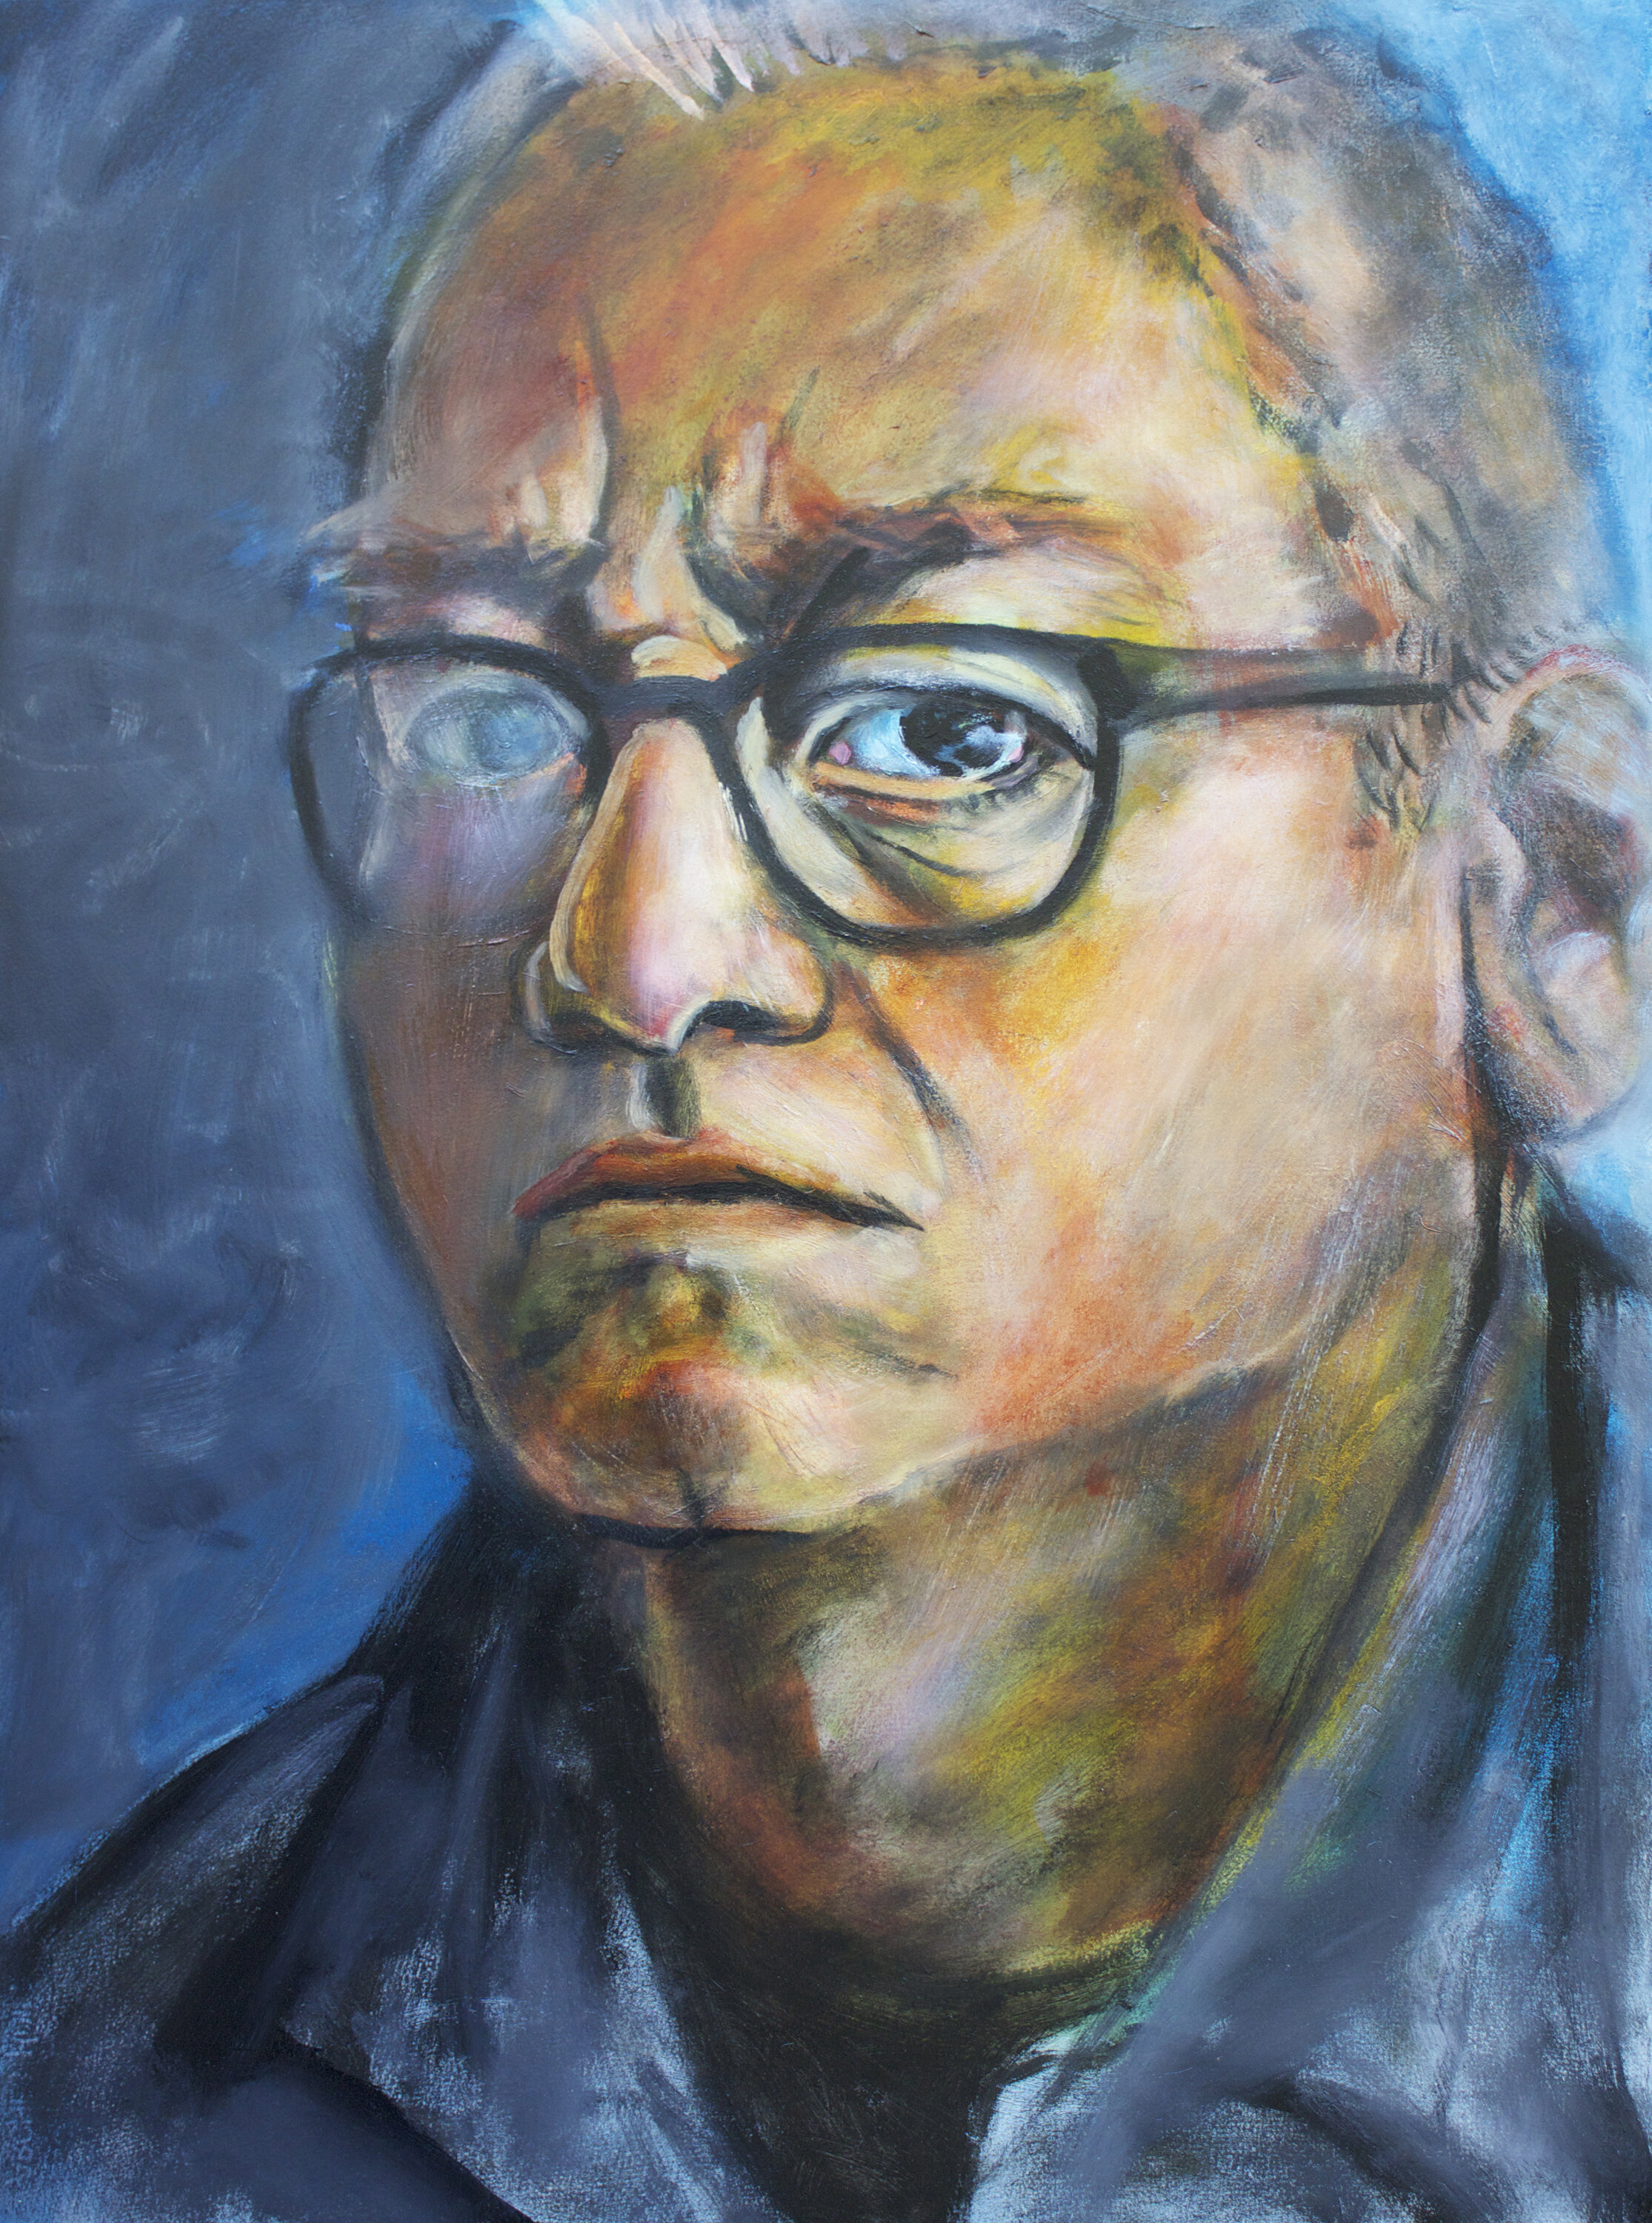 Dan Taulapapa McMullin Self Portrait oil on paper 2015.jpg